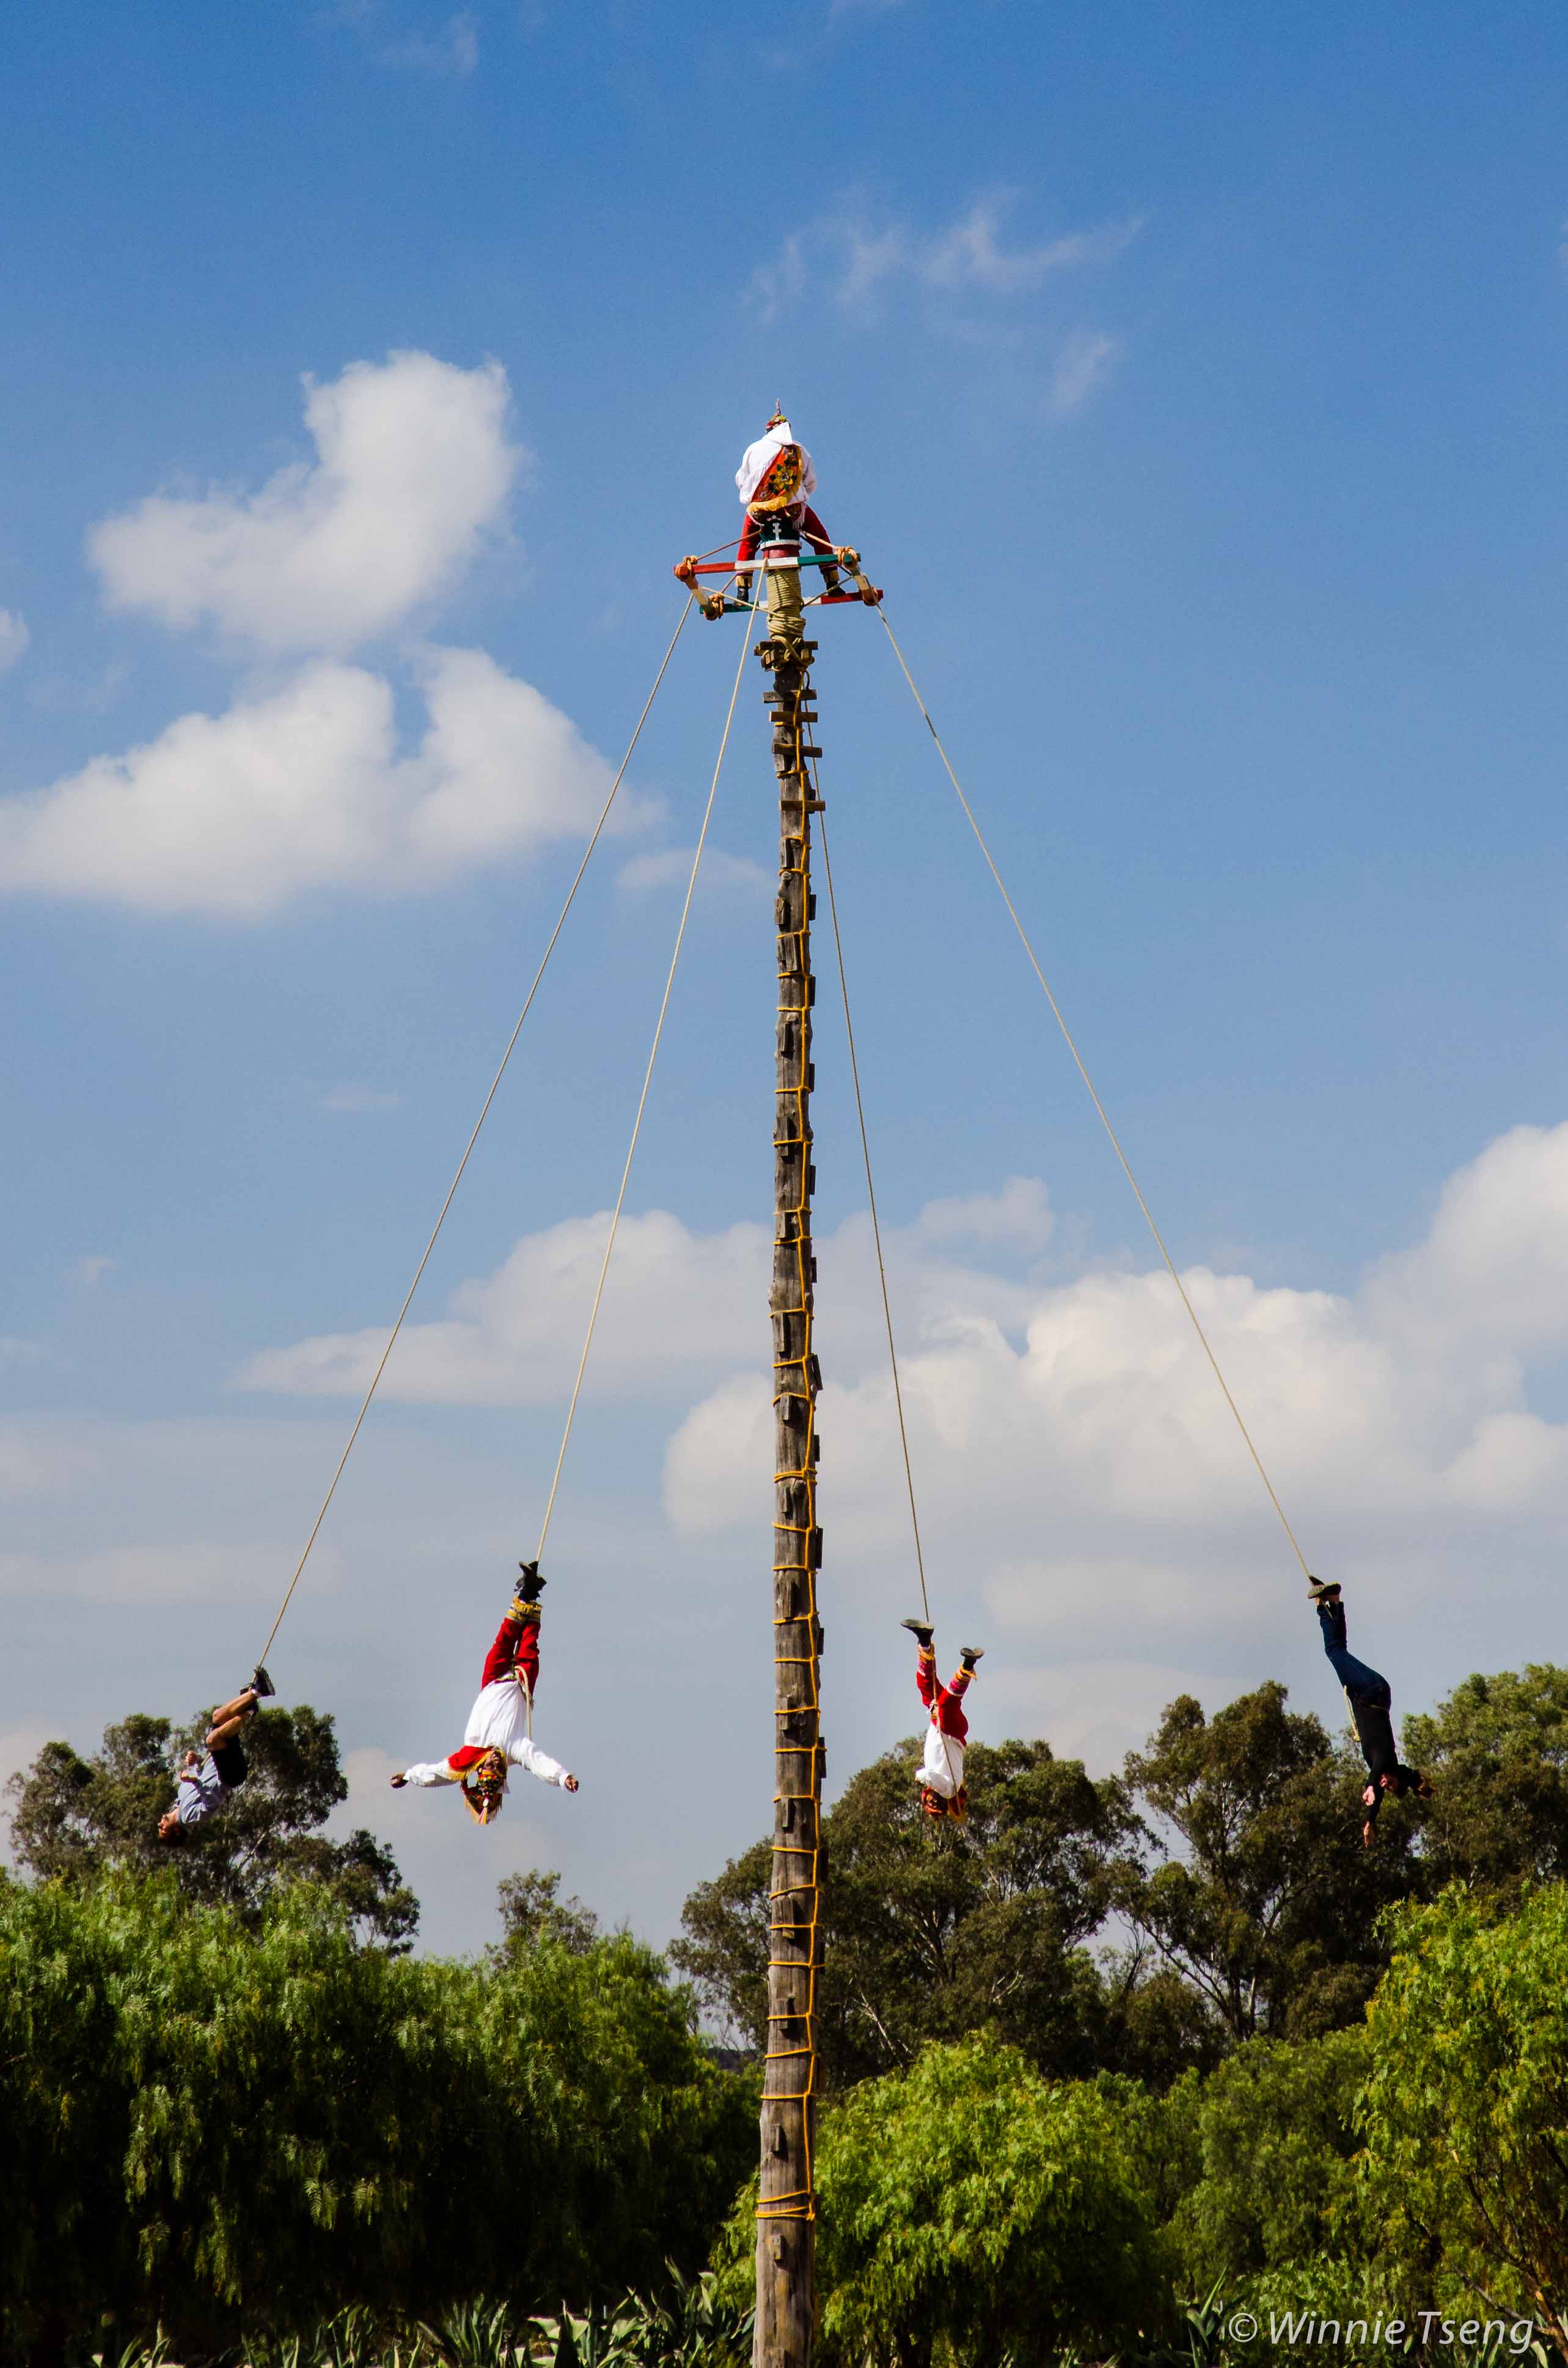 The original bungee jumping